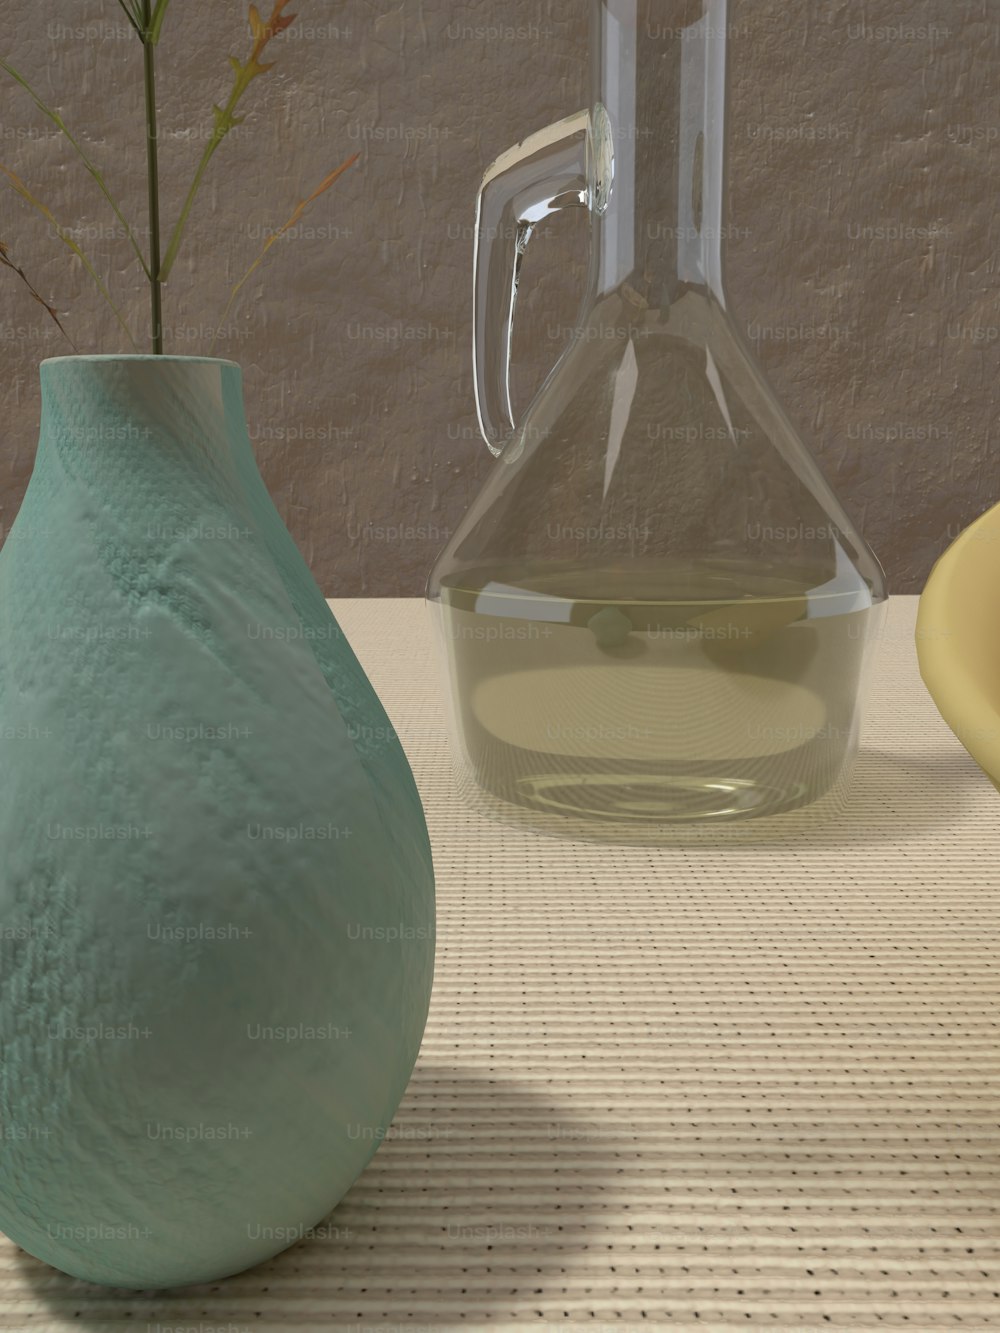 un vaso con un fiore accanto a un vaso con un liquido in esso